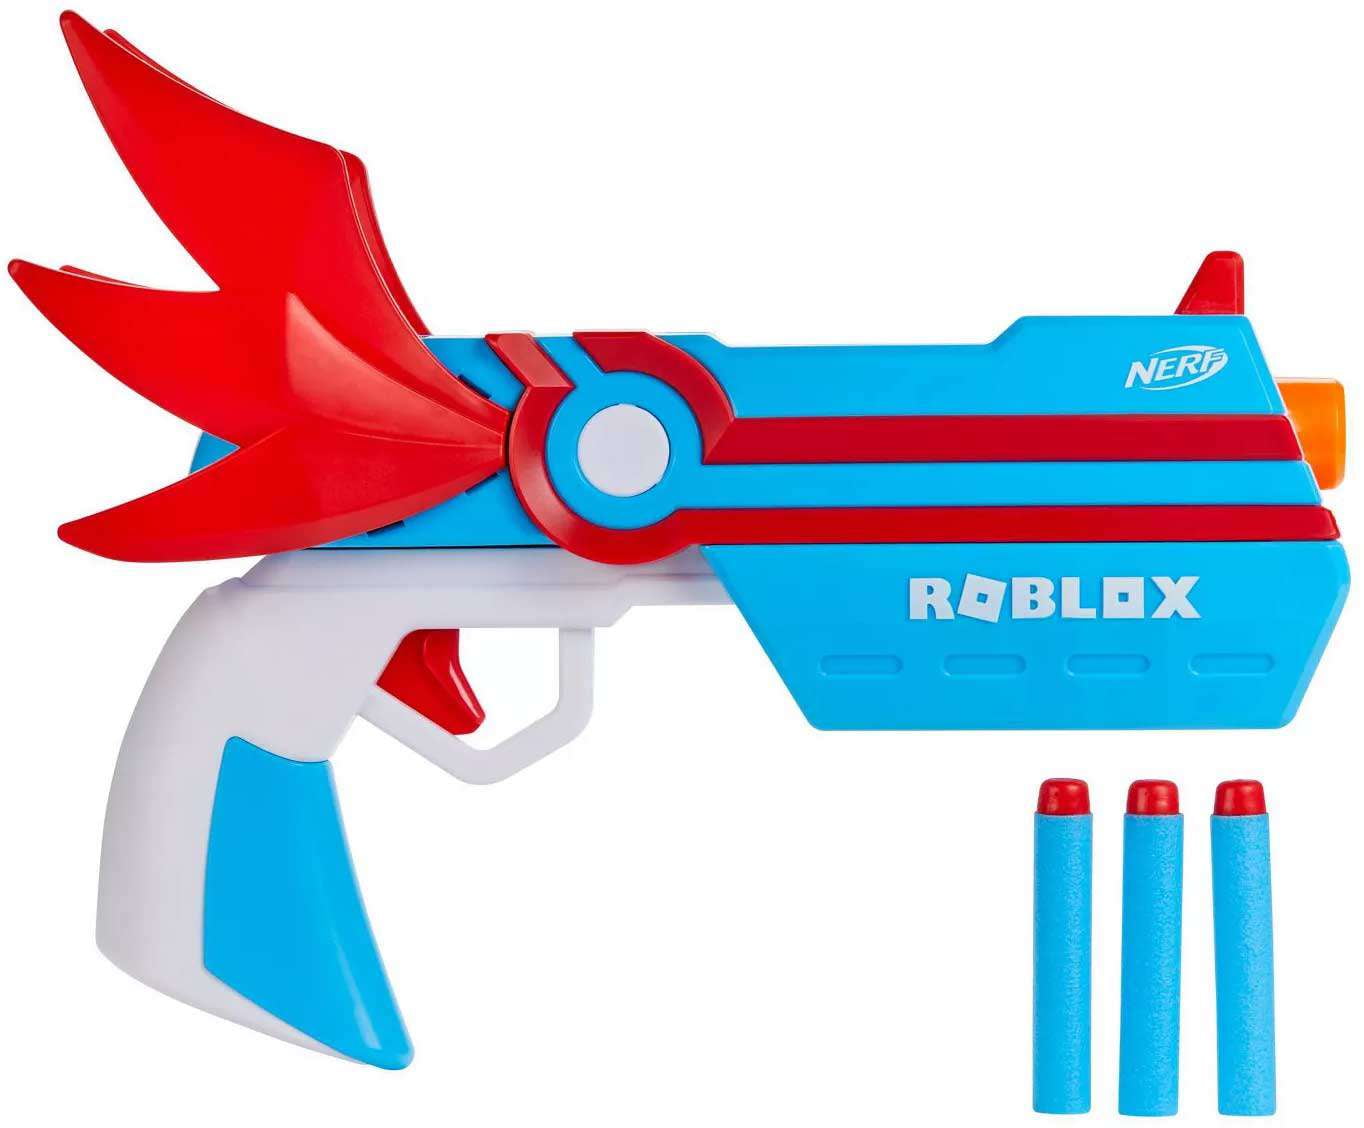 Nerf Roblox MM2